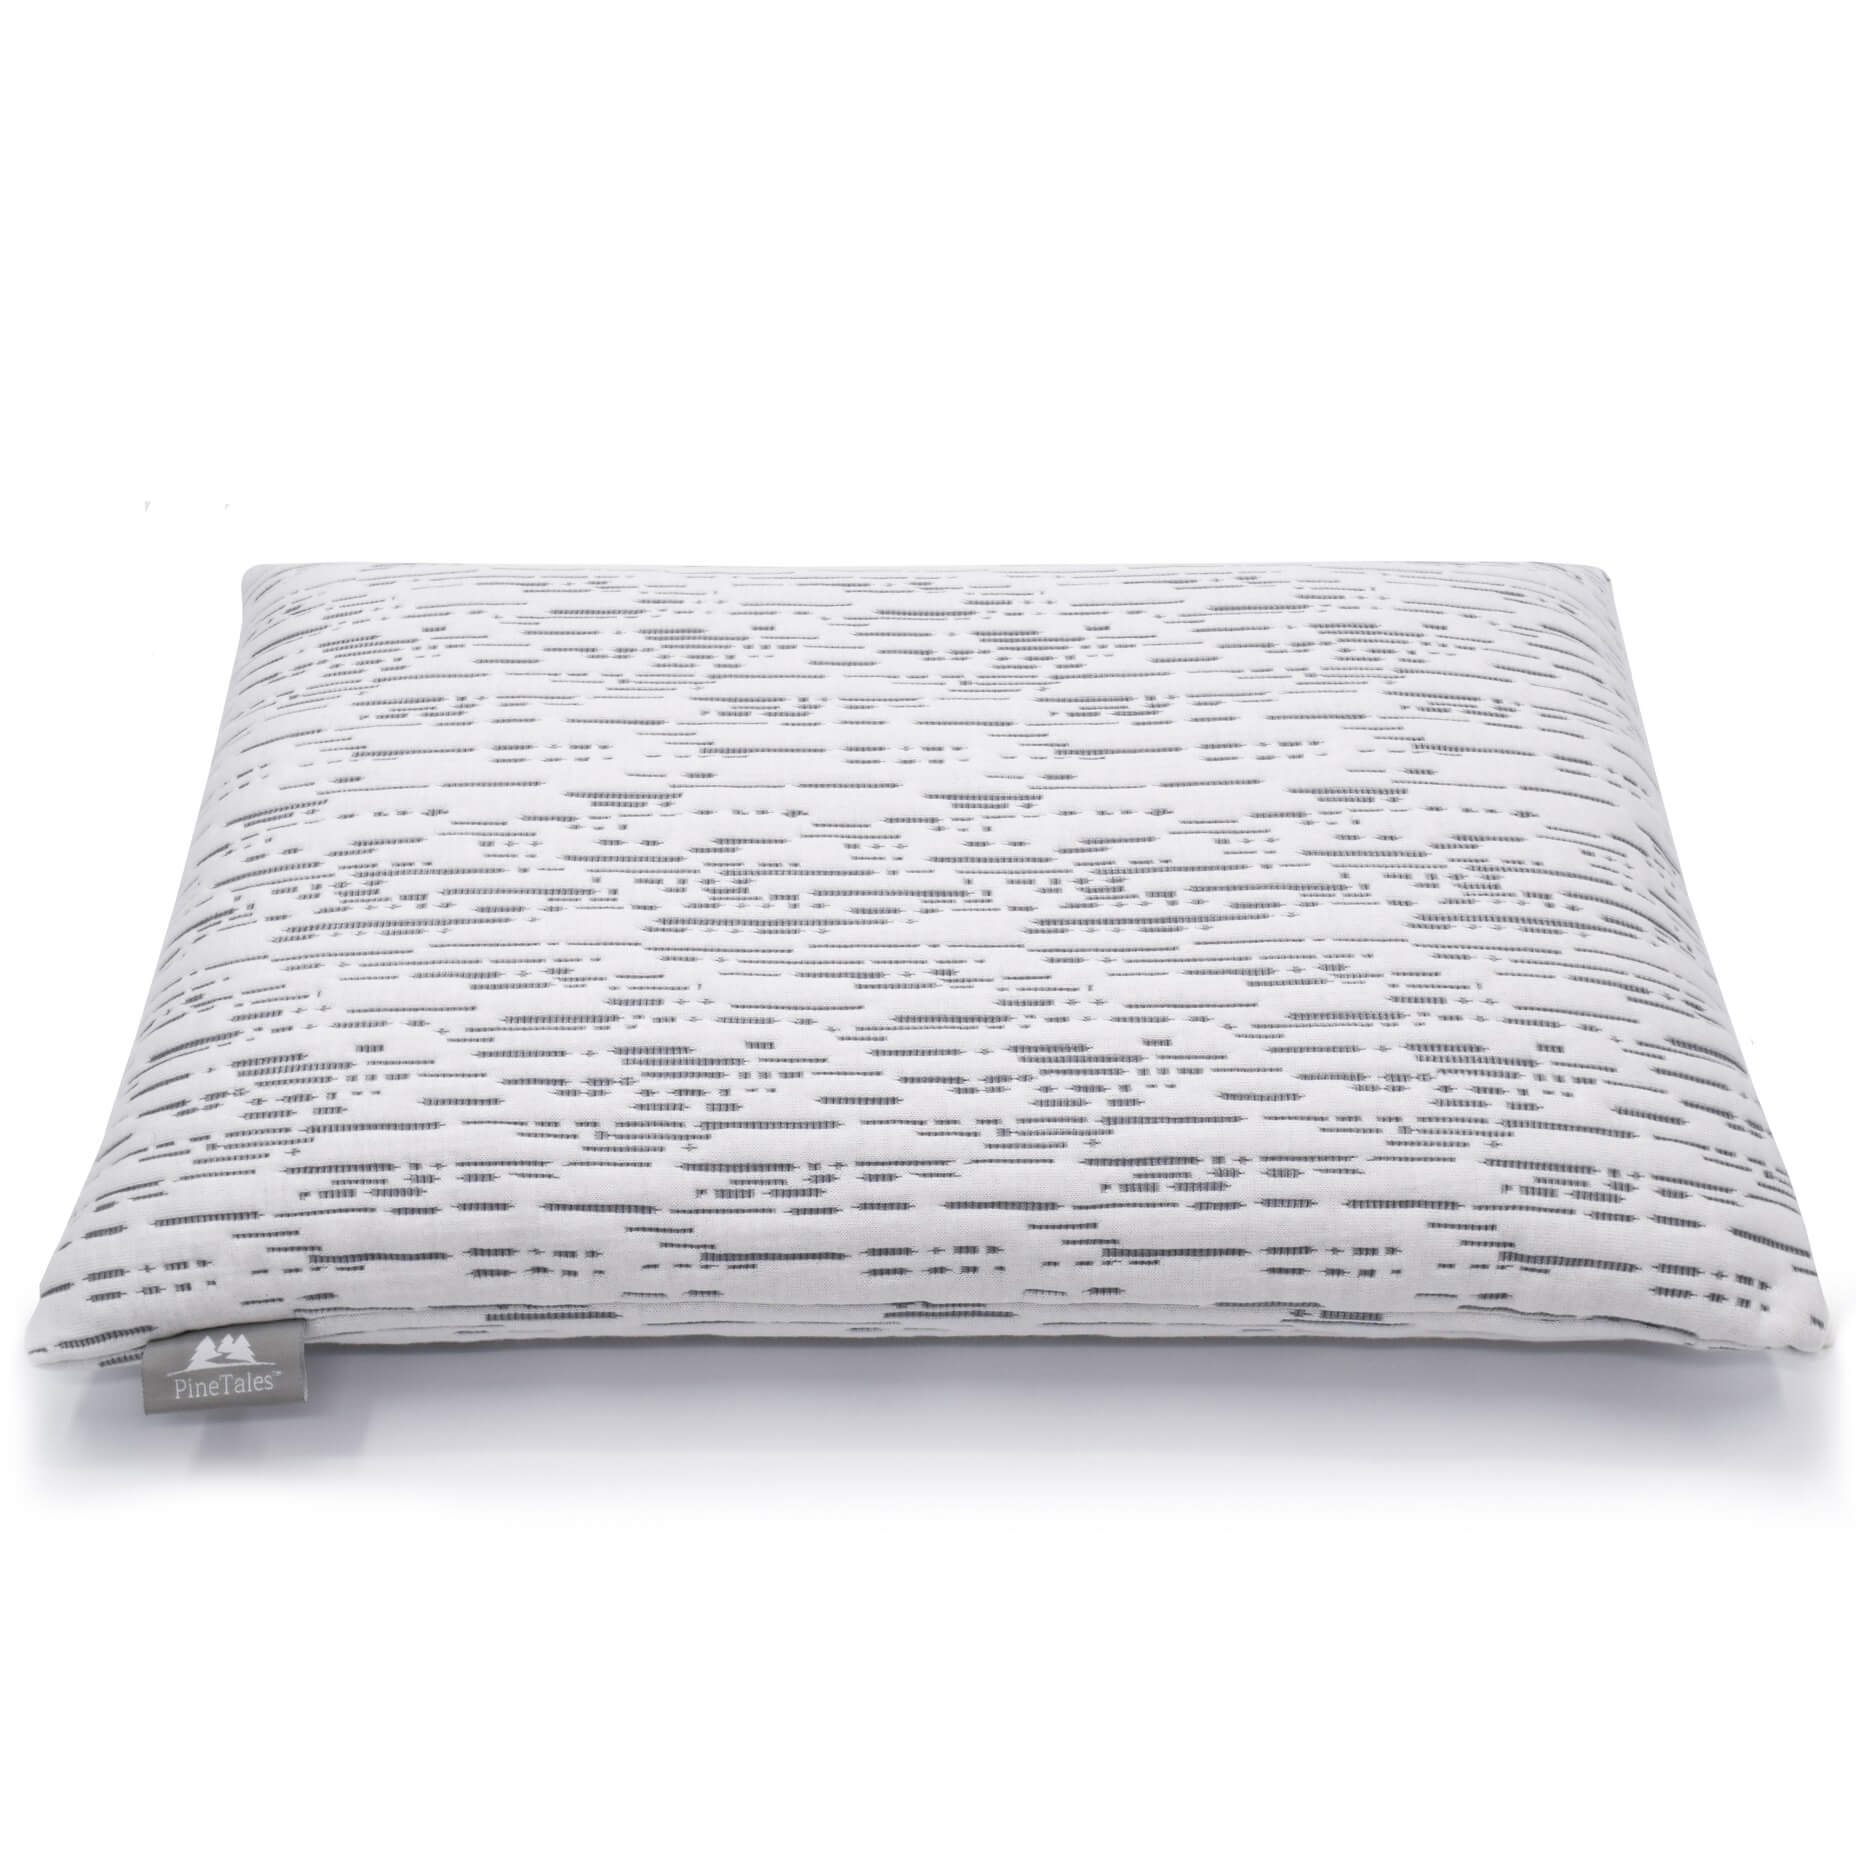 Premium Buckwheat Hulls Pillow by PineTales®